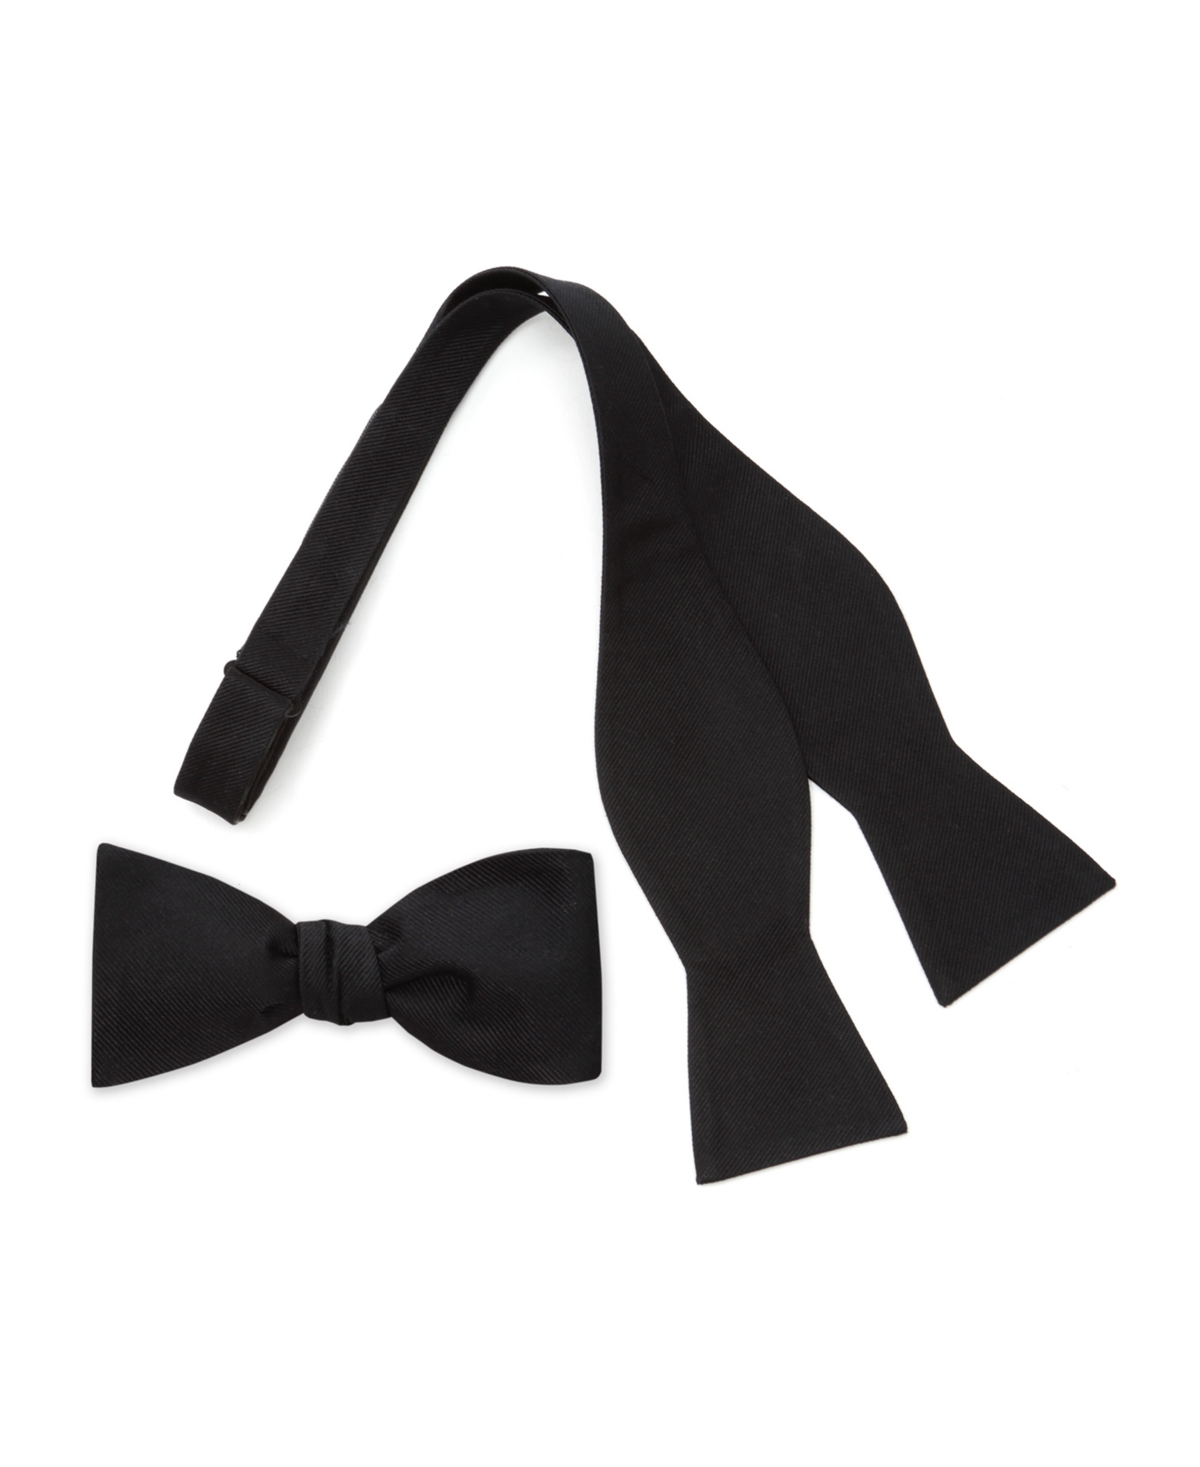 Men's Self Bow Tie - Black